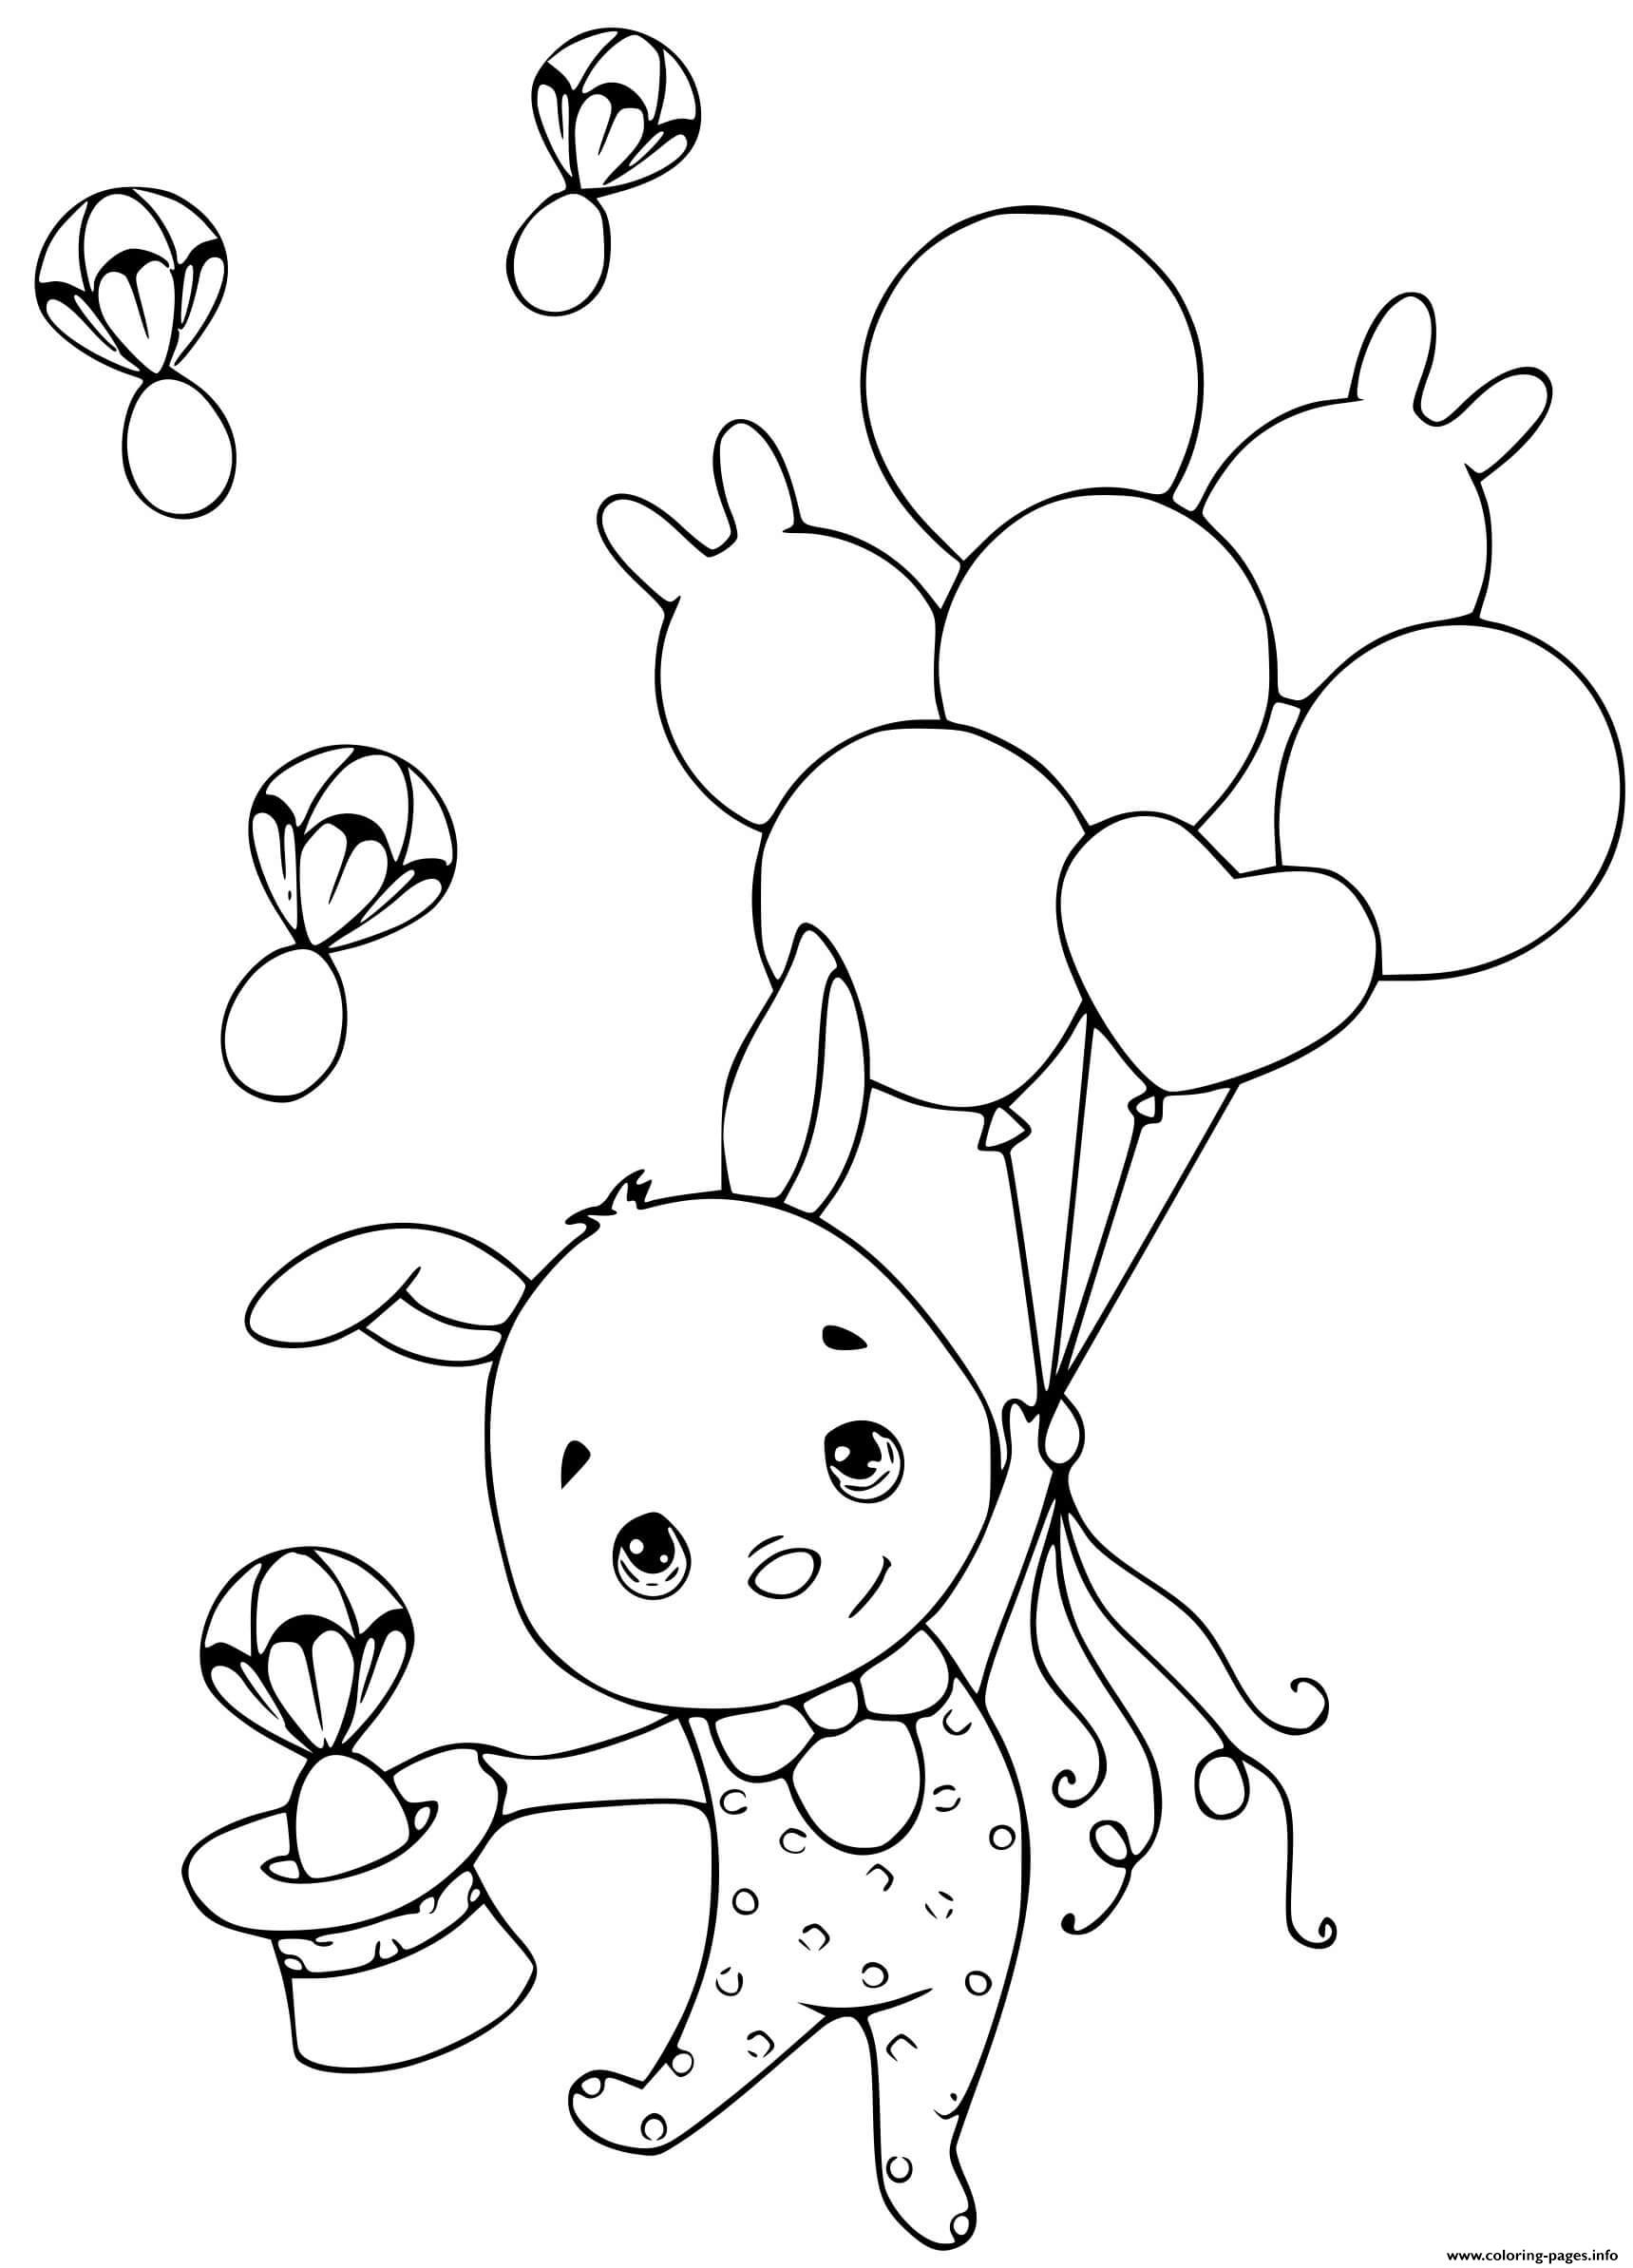 Easter Bunny Flies Balloons coloring